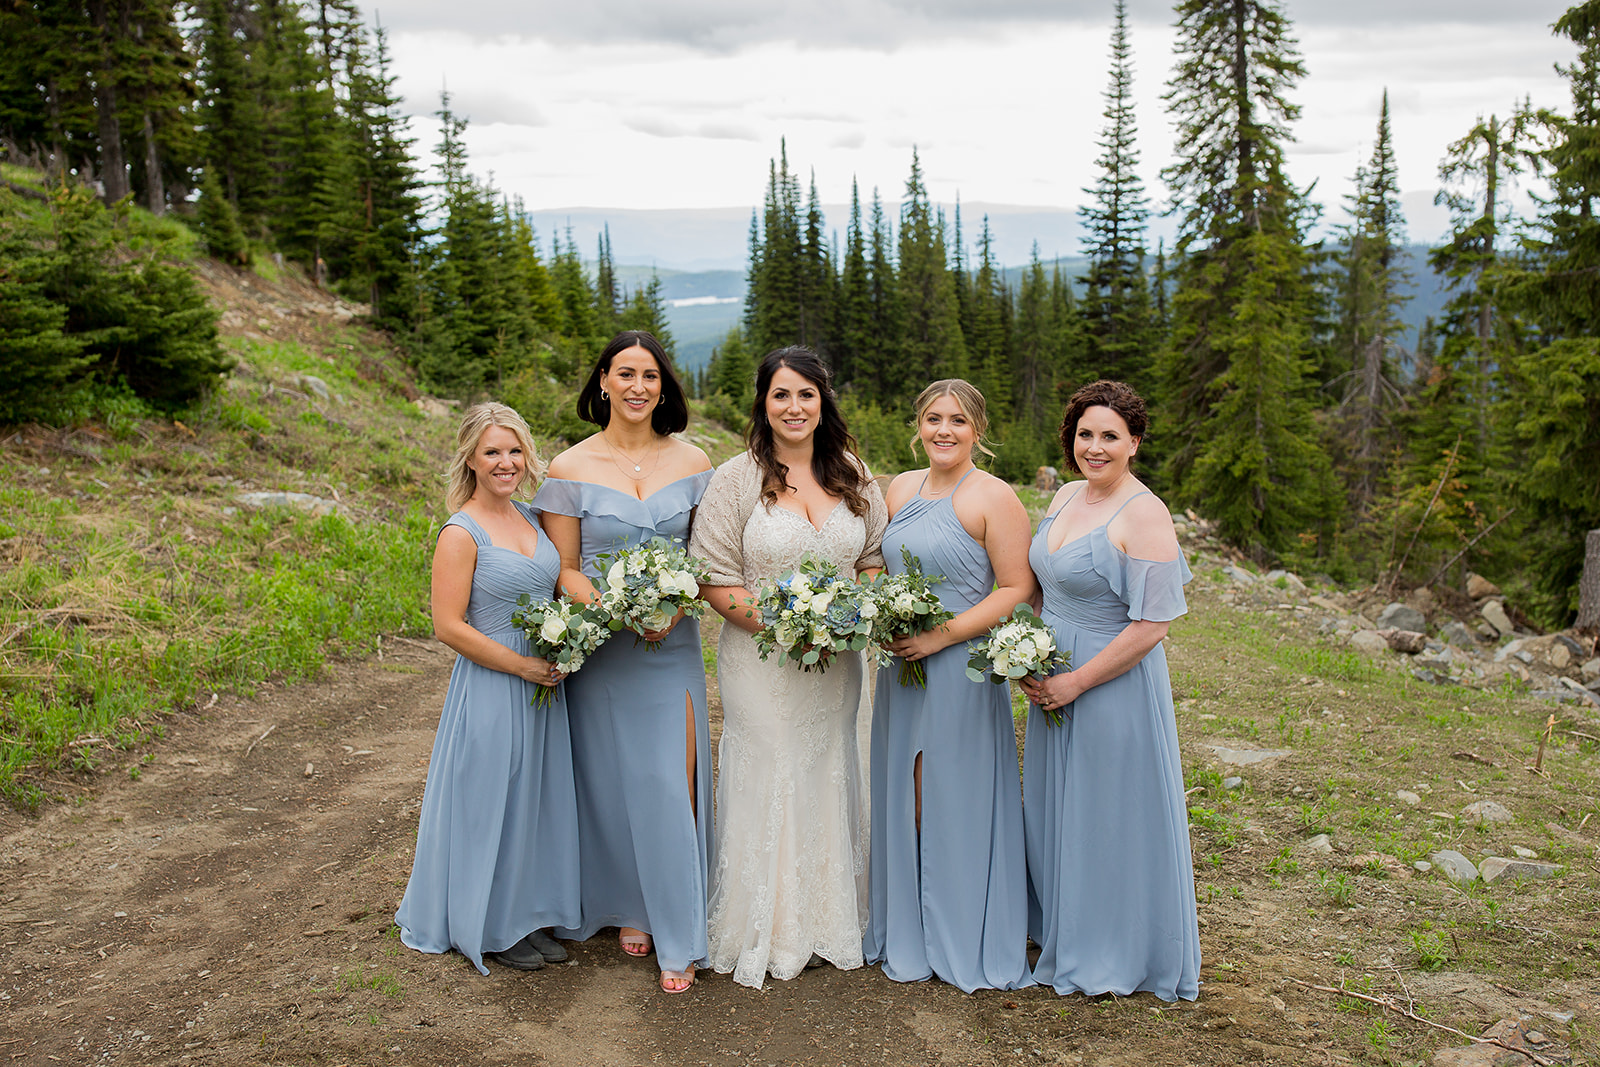 sun-peaks-resort-mountain-wedding-party-kathryn-mclaren-photography-bridemaids